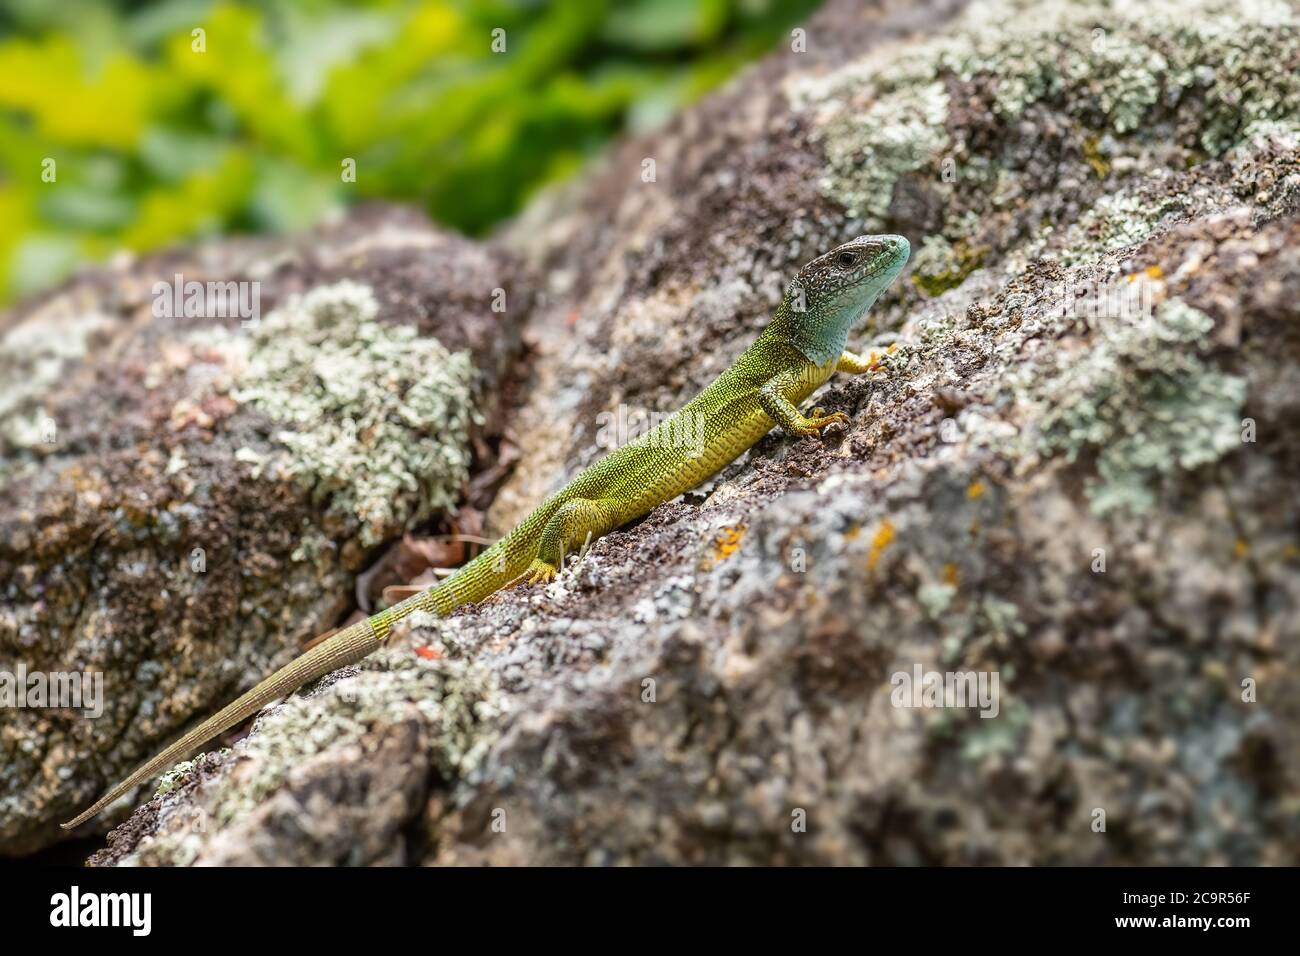 Lagarto verde - Lacerta viridis, Croacia, hermoso lagarto pequeño de prados y praderas europeas, isla Pag, Croacia, Europa. Foto de stock